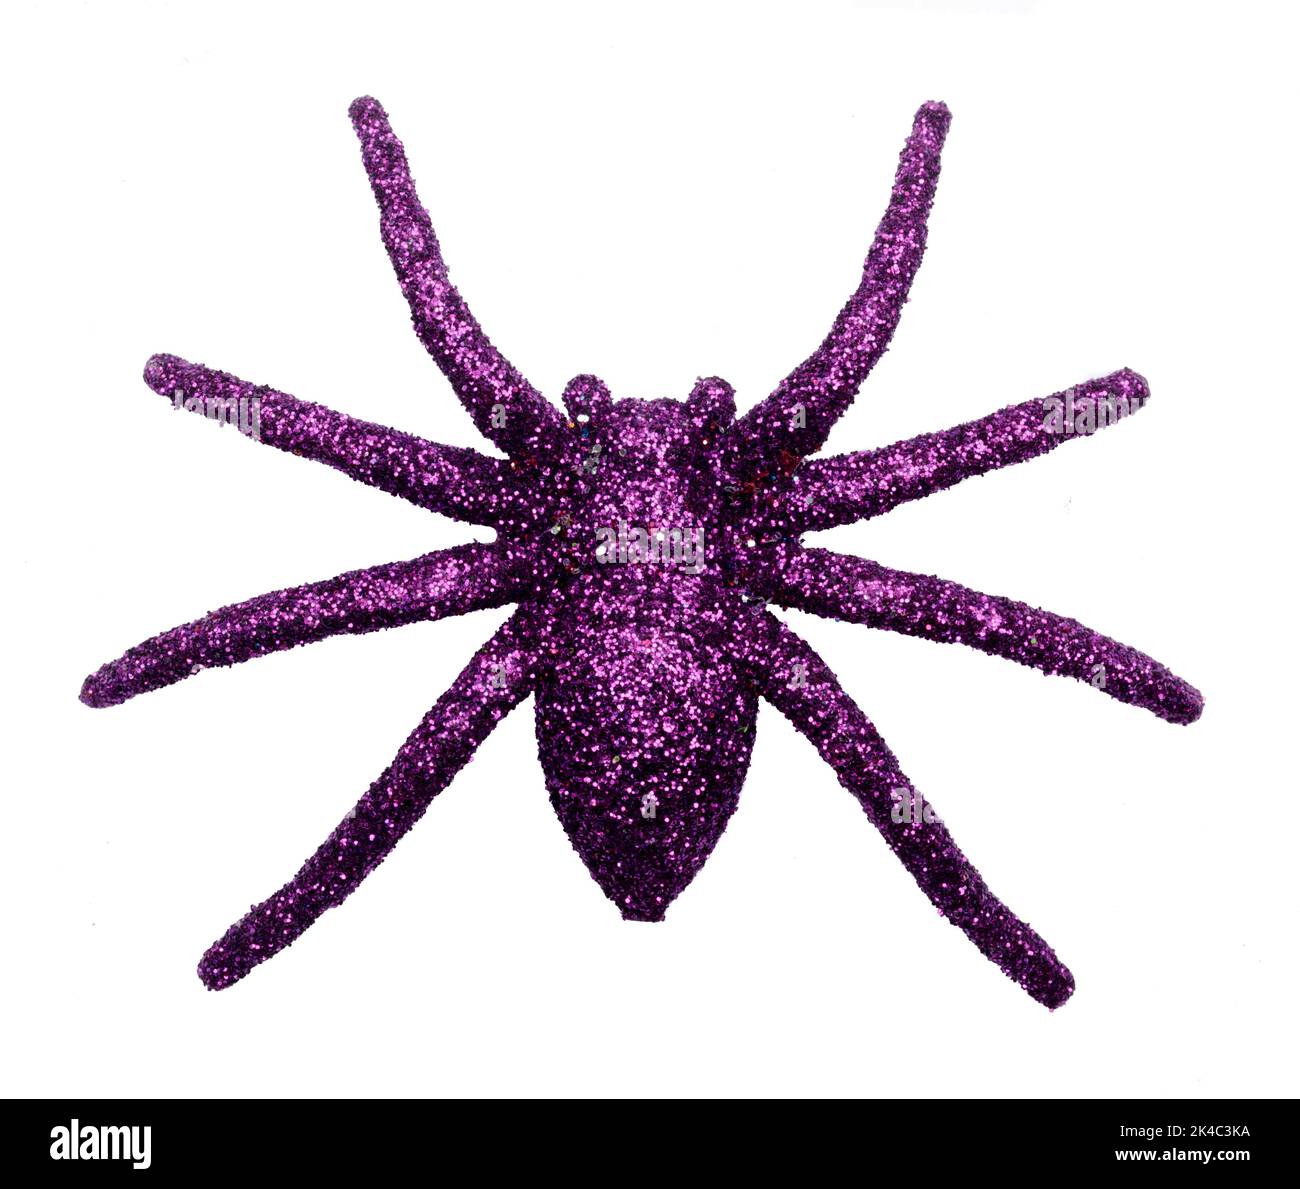 Glitter Purple Spider Halloween Decoration Isolated on White Background Stock Photo